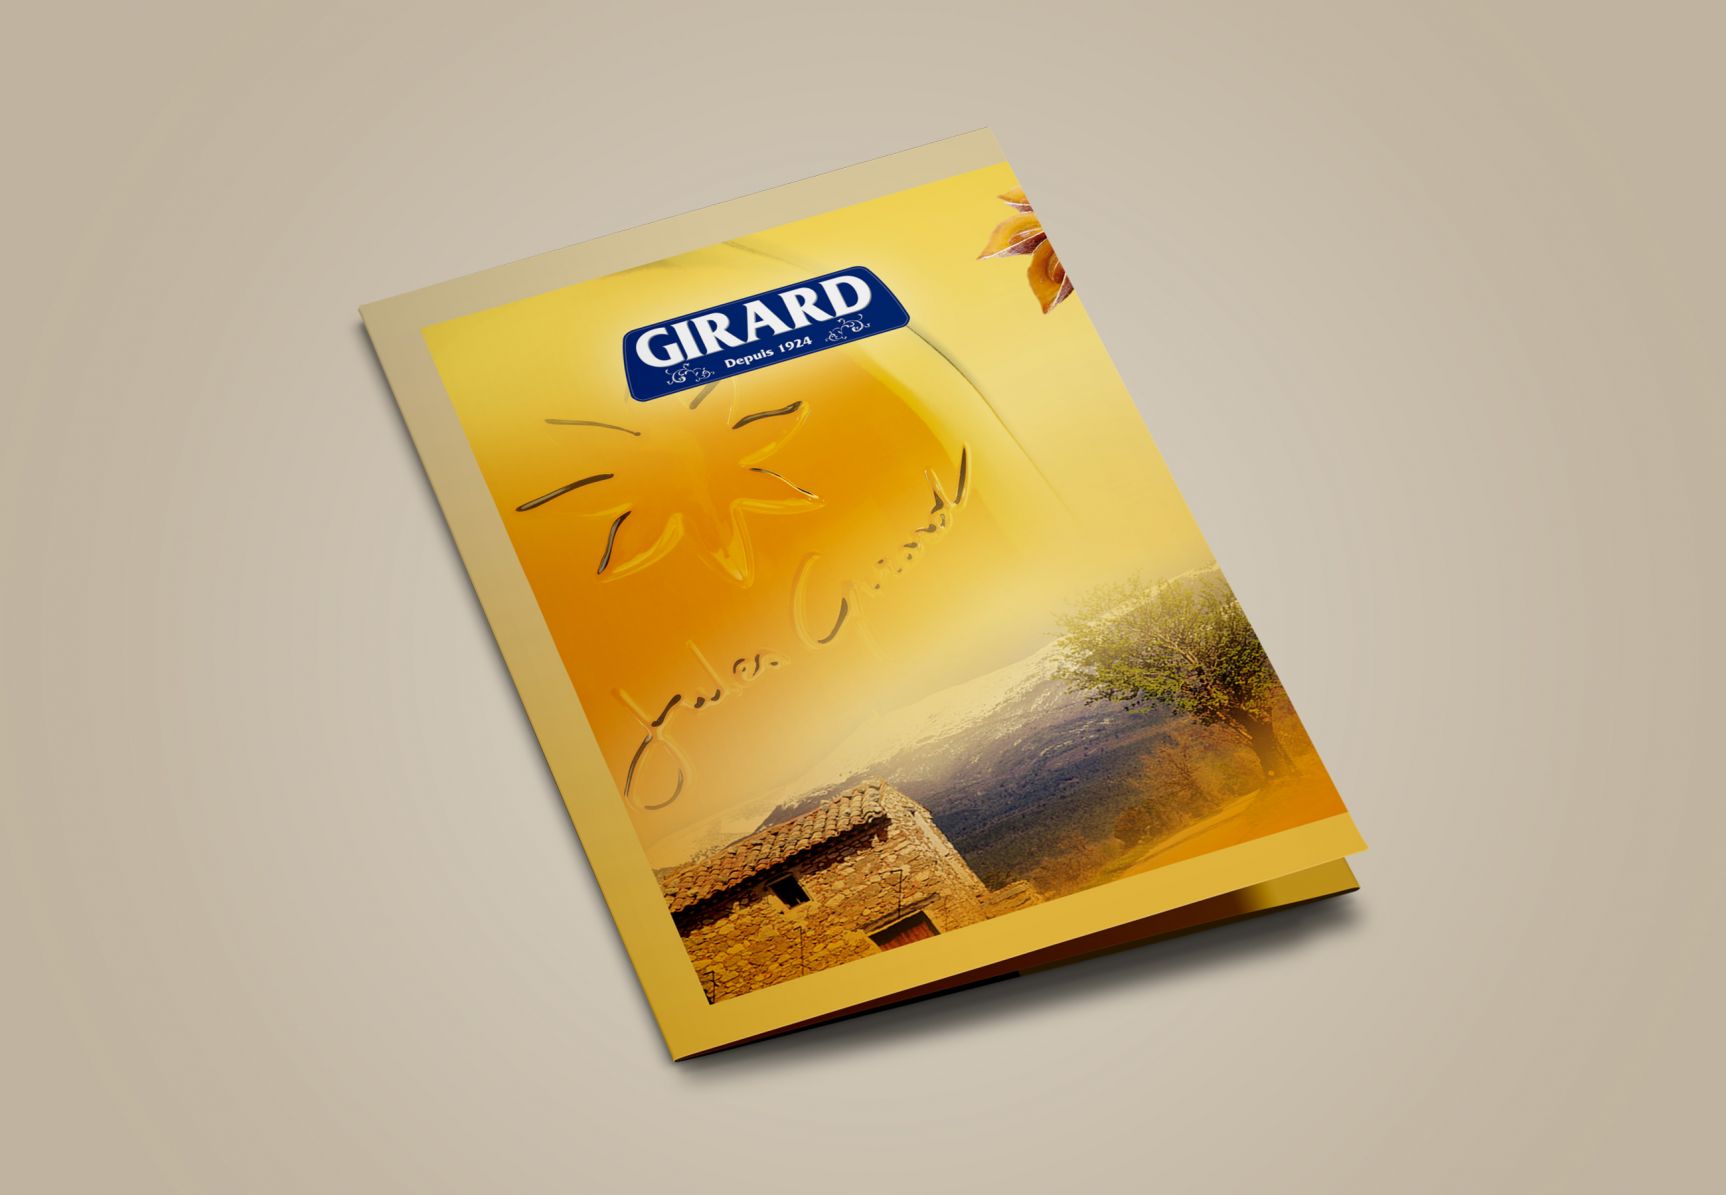 Pastis Girard Brochure Couverture